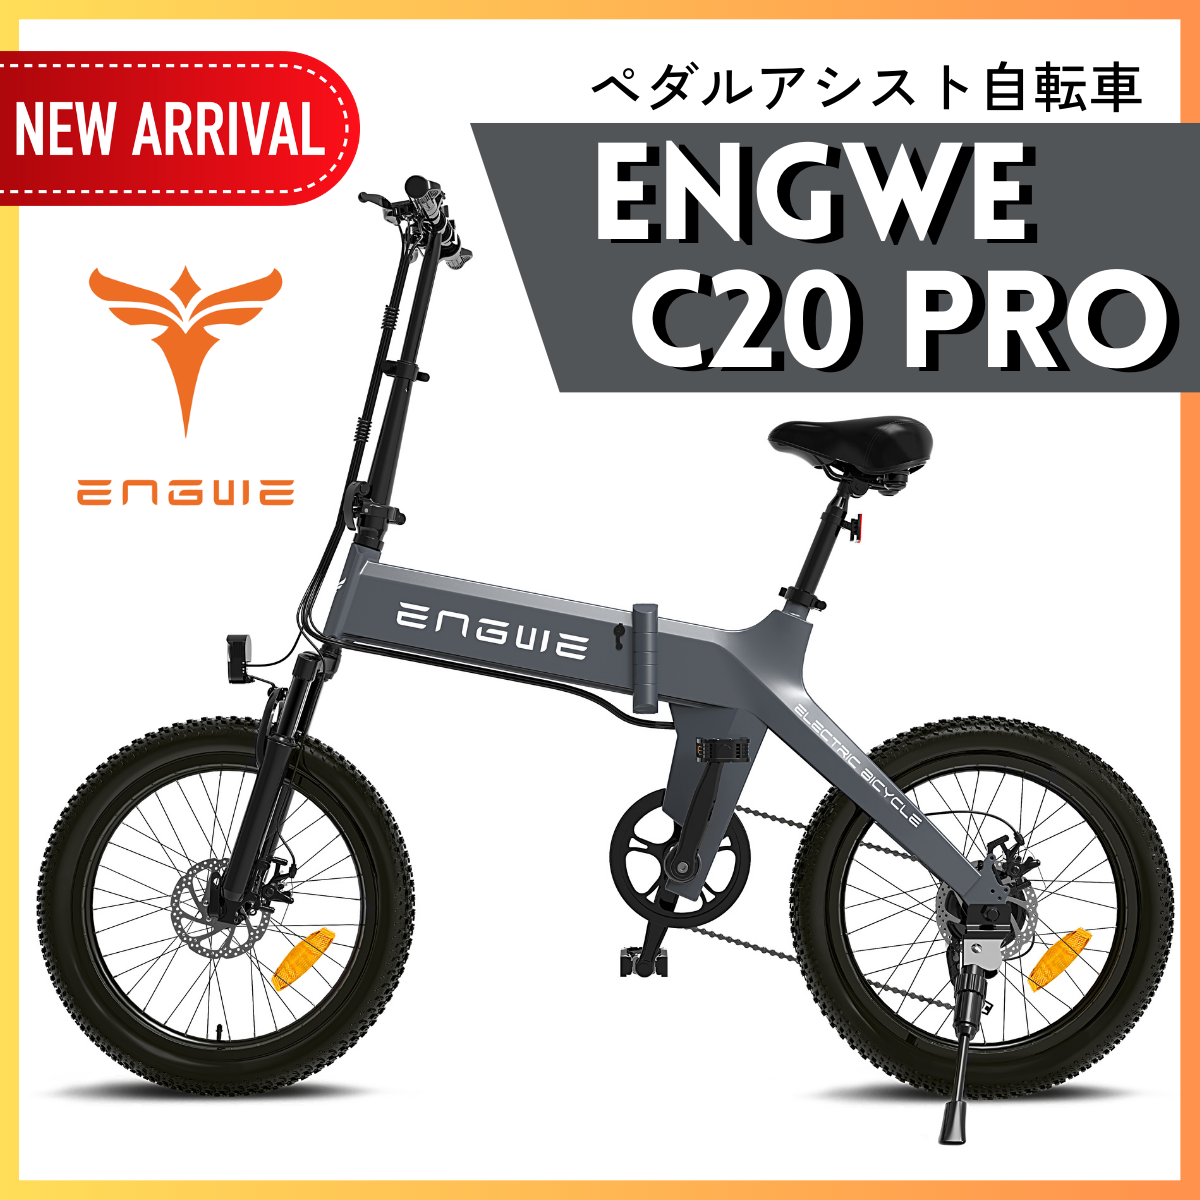 ENGWE C20 PRO 折り畳みペダルアシスト自転車